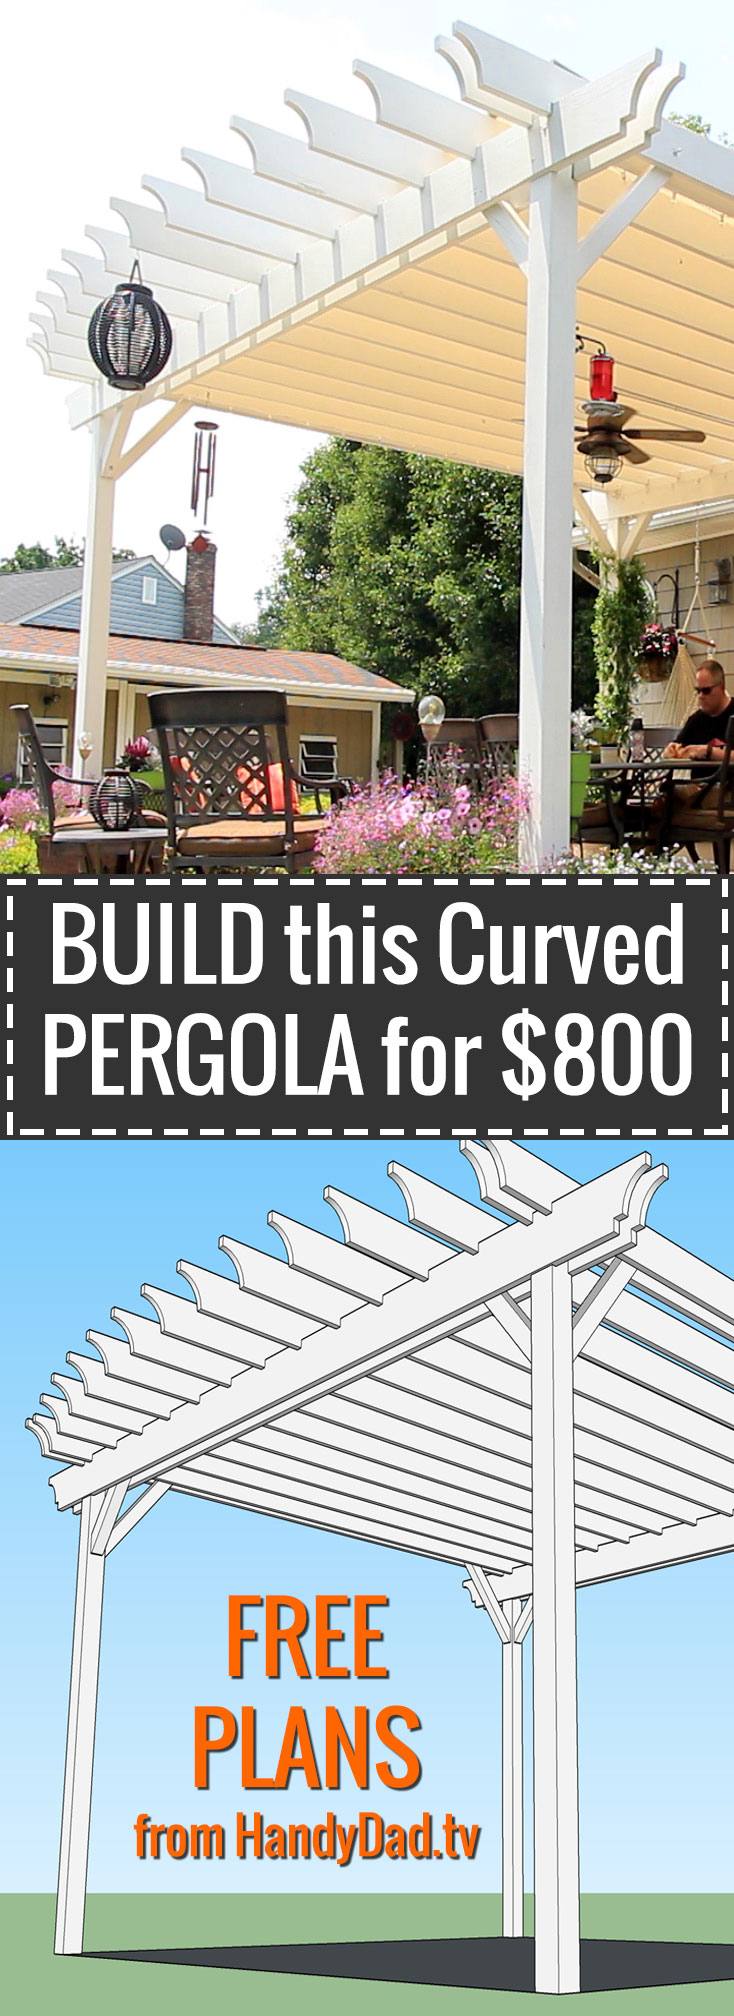 Build a Curved Pergola for $800